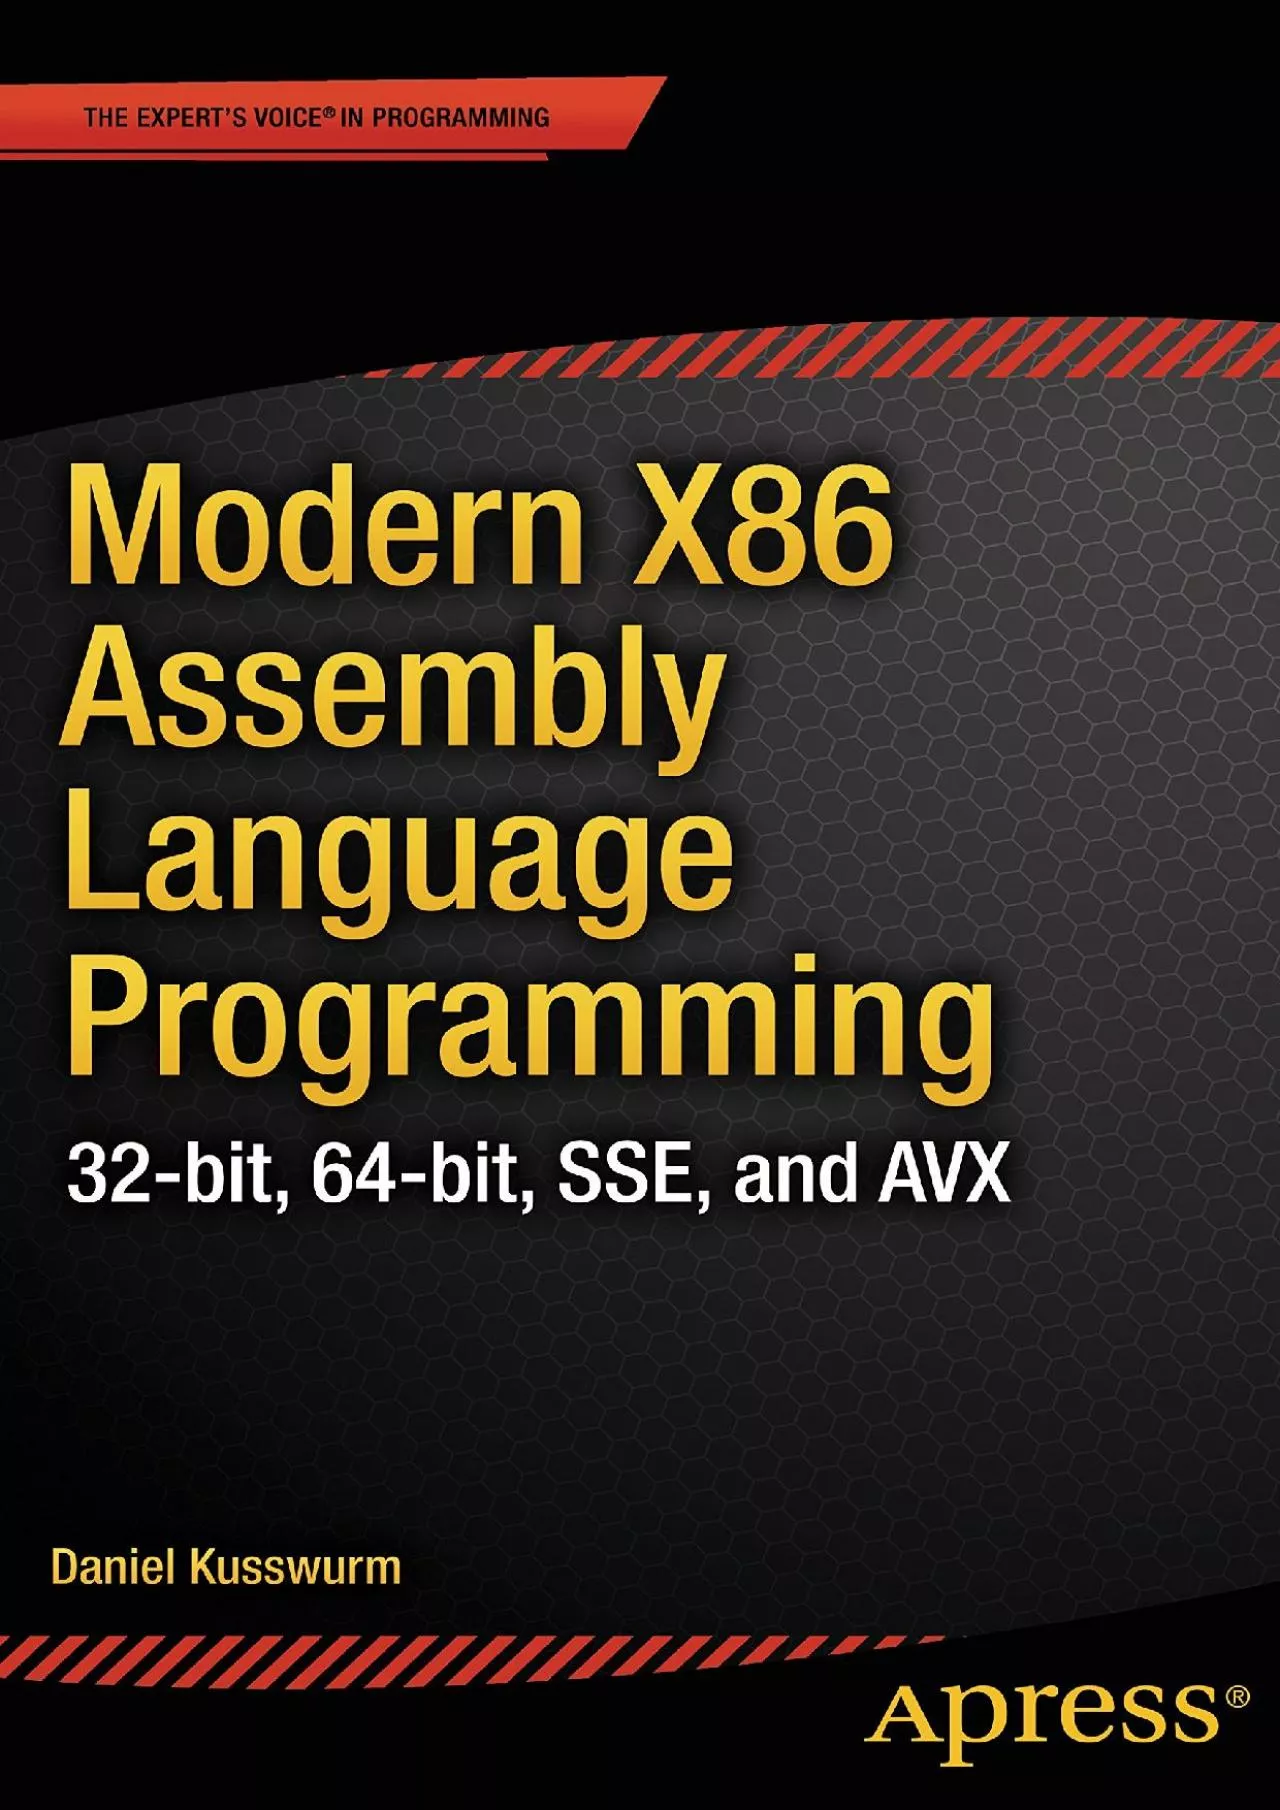 [READING BOOK]-Modern X86 Assembly Language Programming: 32-bit, 64-bit, SSE, and AVX